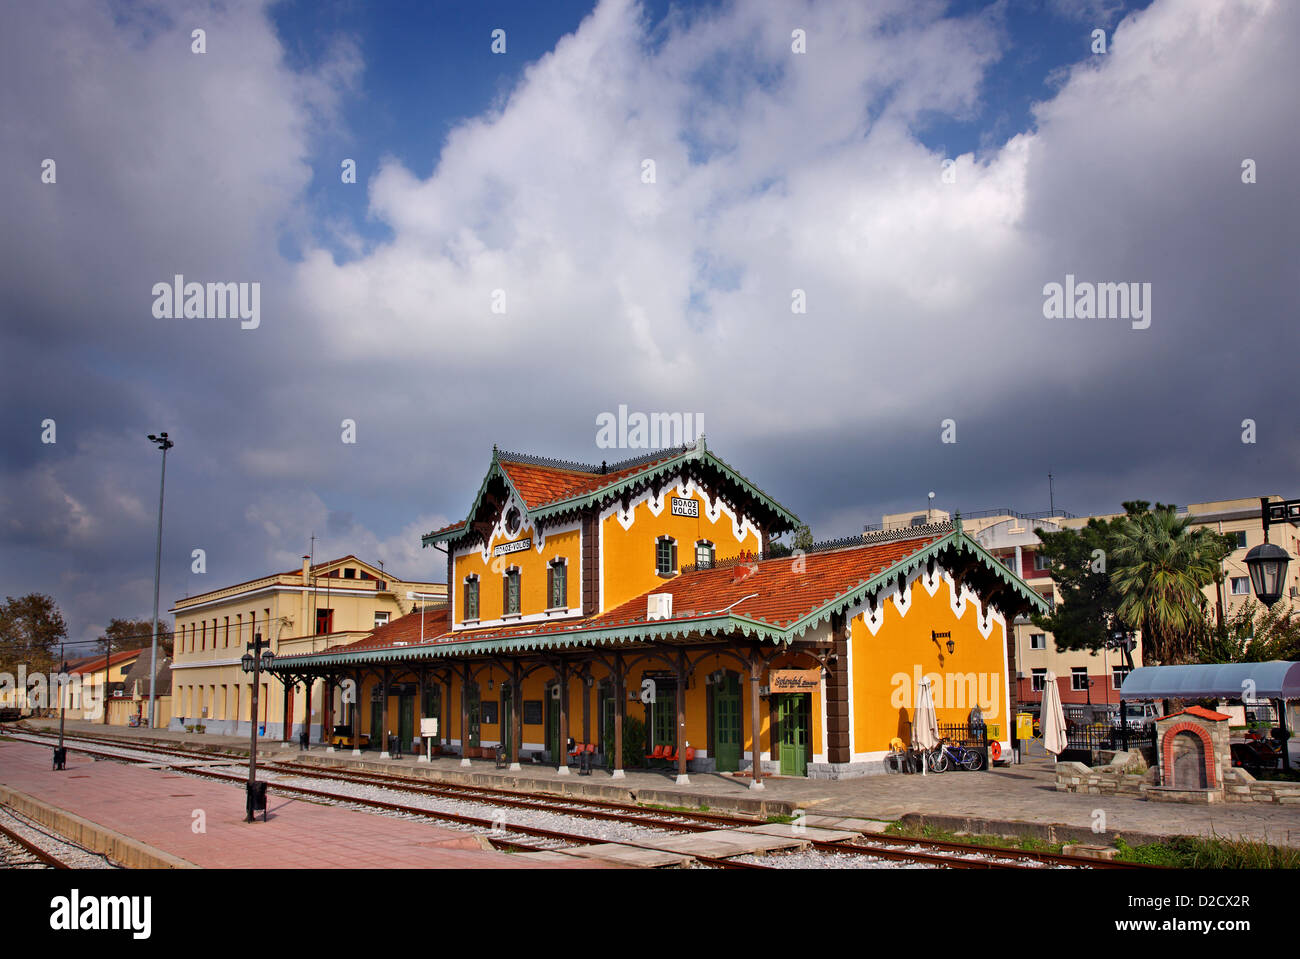 The train station of Volos (Greece), designed by Evaristo de Chirico, father of the famous painter, Giorgio de Chirico. Stock Photo